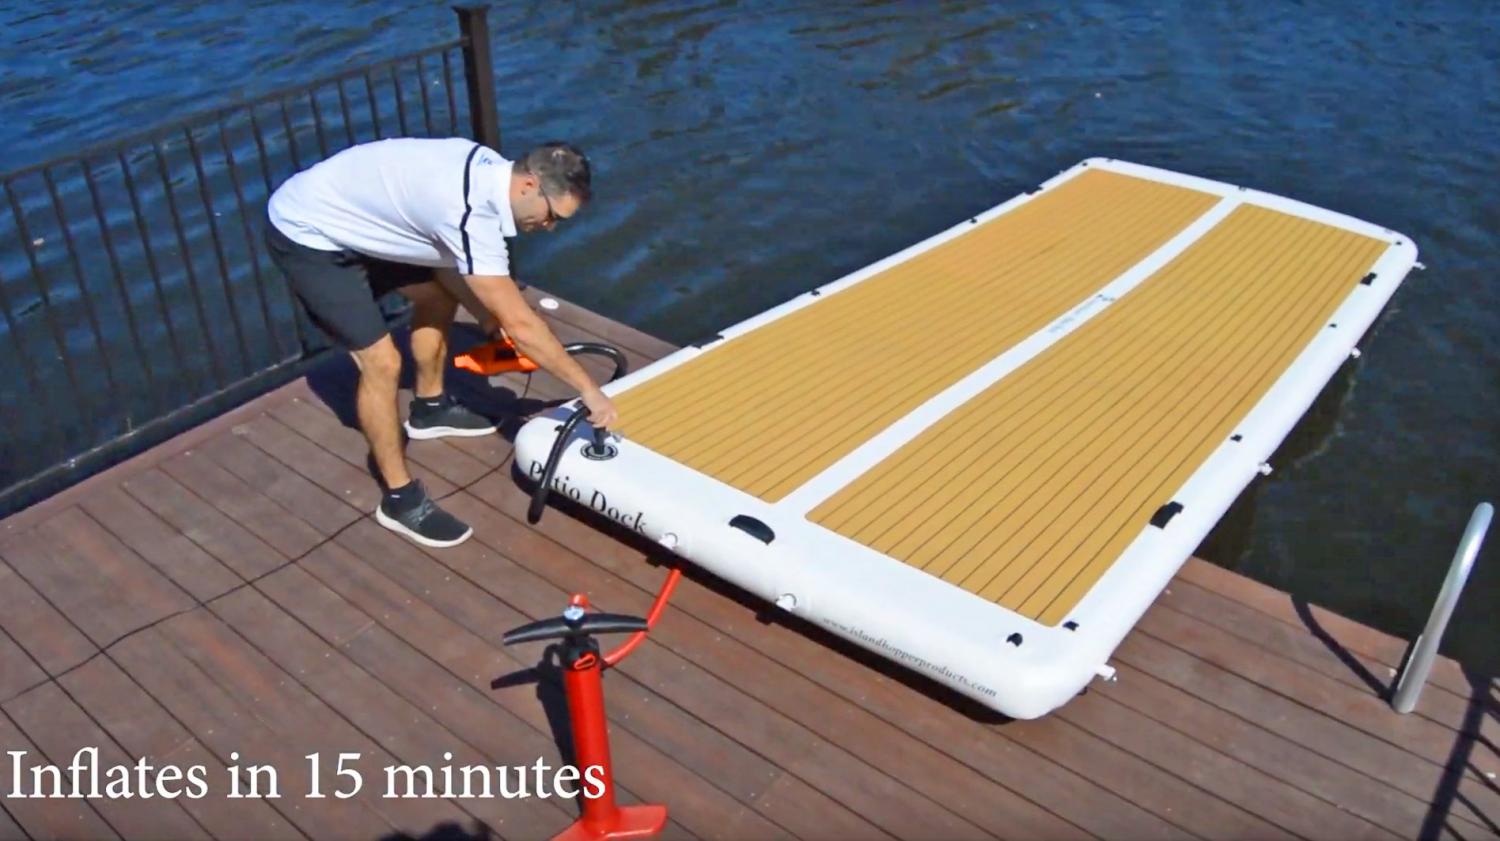 Giant Inflatable Patio Deck - Island Hopper Patio Dock Lake Float